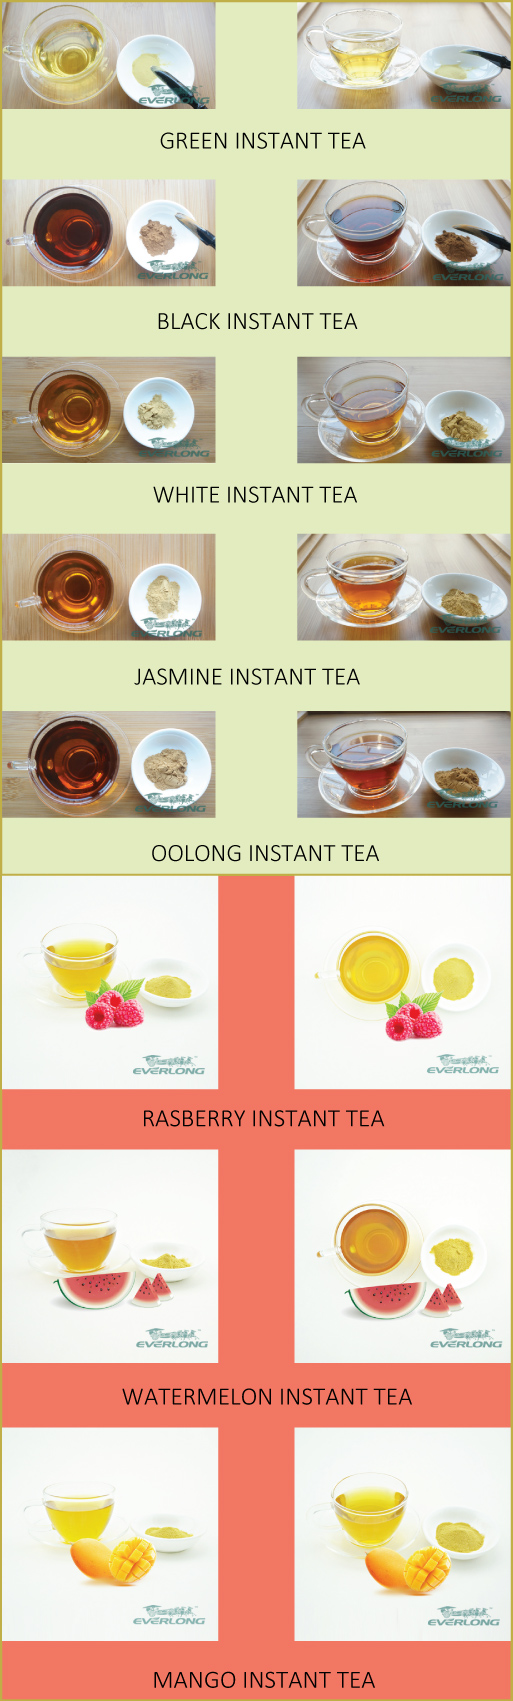 Instant Tea Extract Black Tea Powder